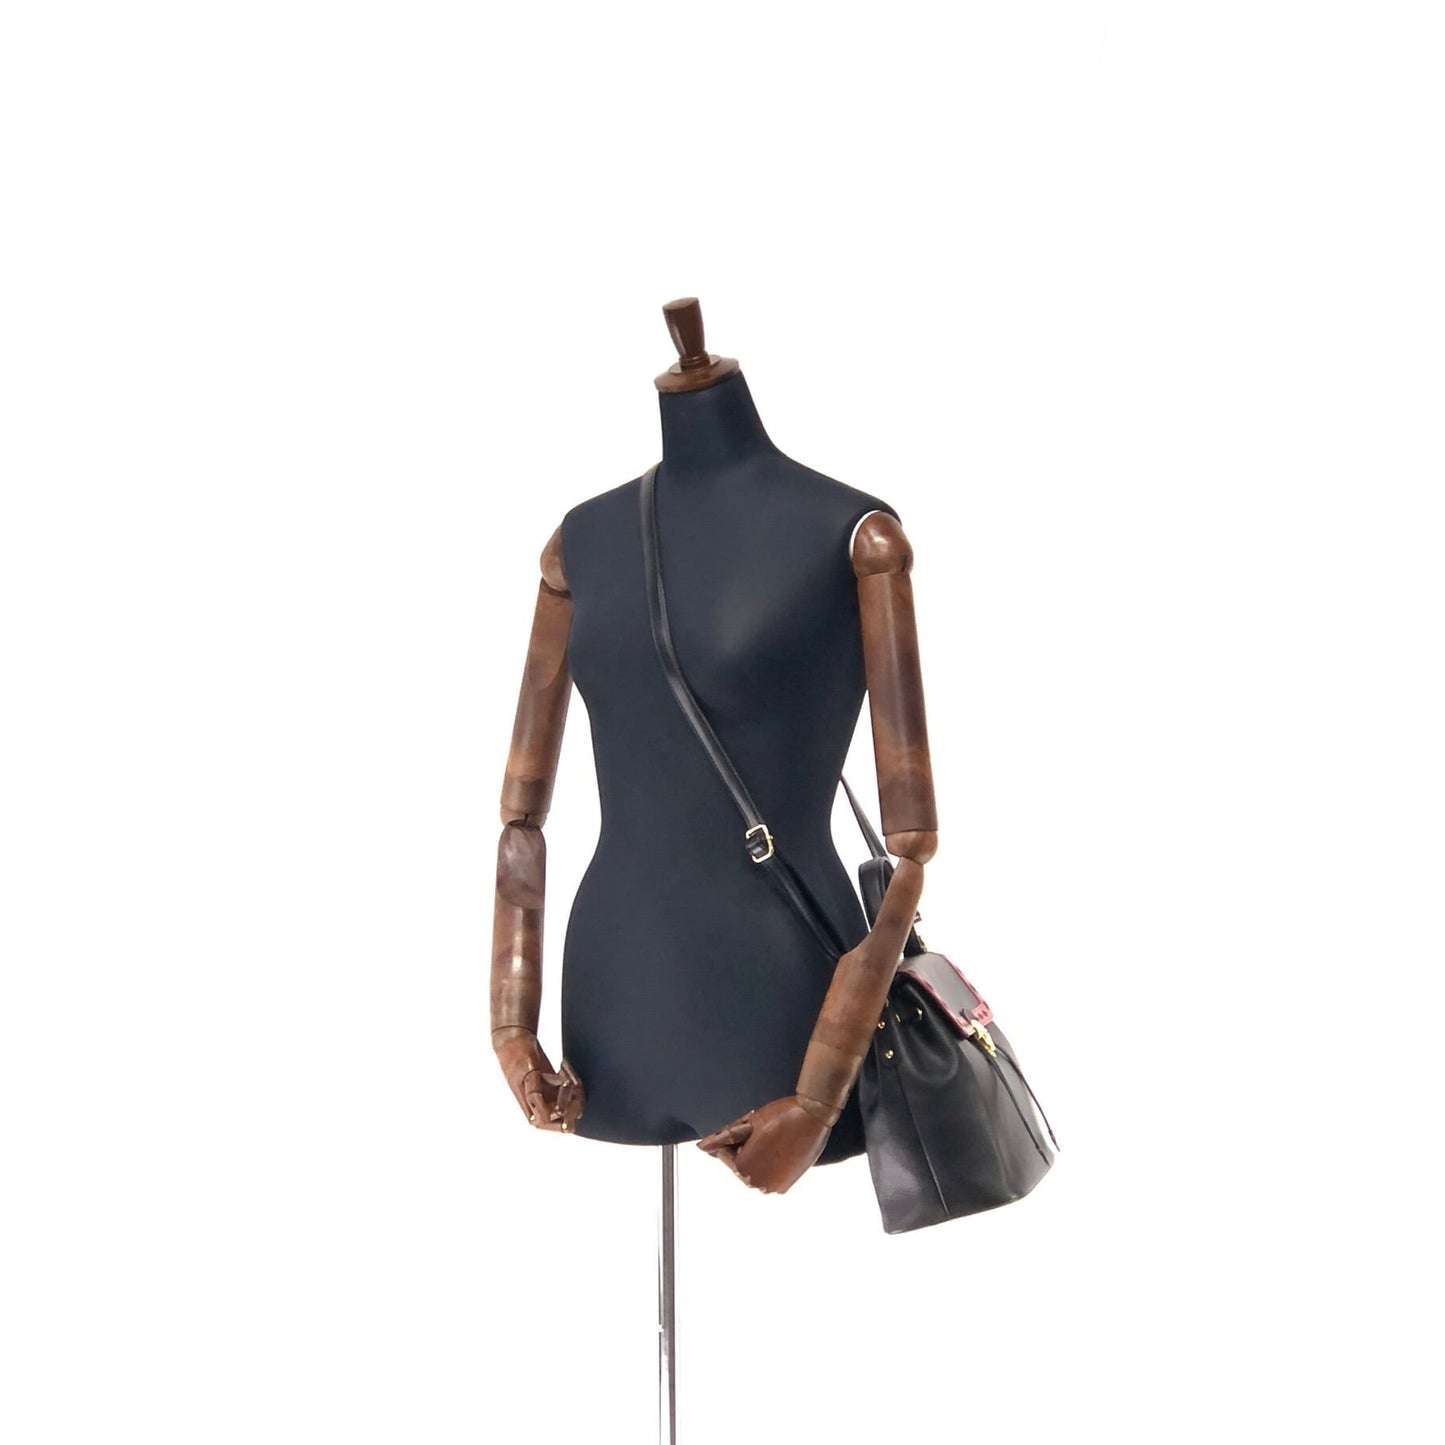 Yves Saint Laurent diamond cut YSL 2way leather shoulder bag handbag black vintage old axstfw